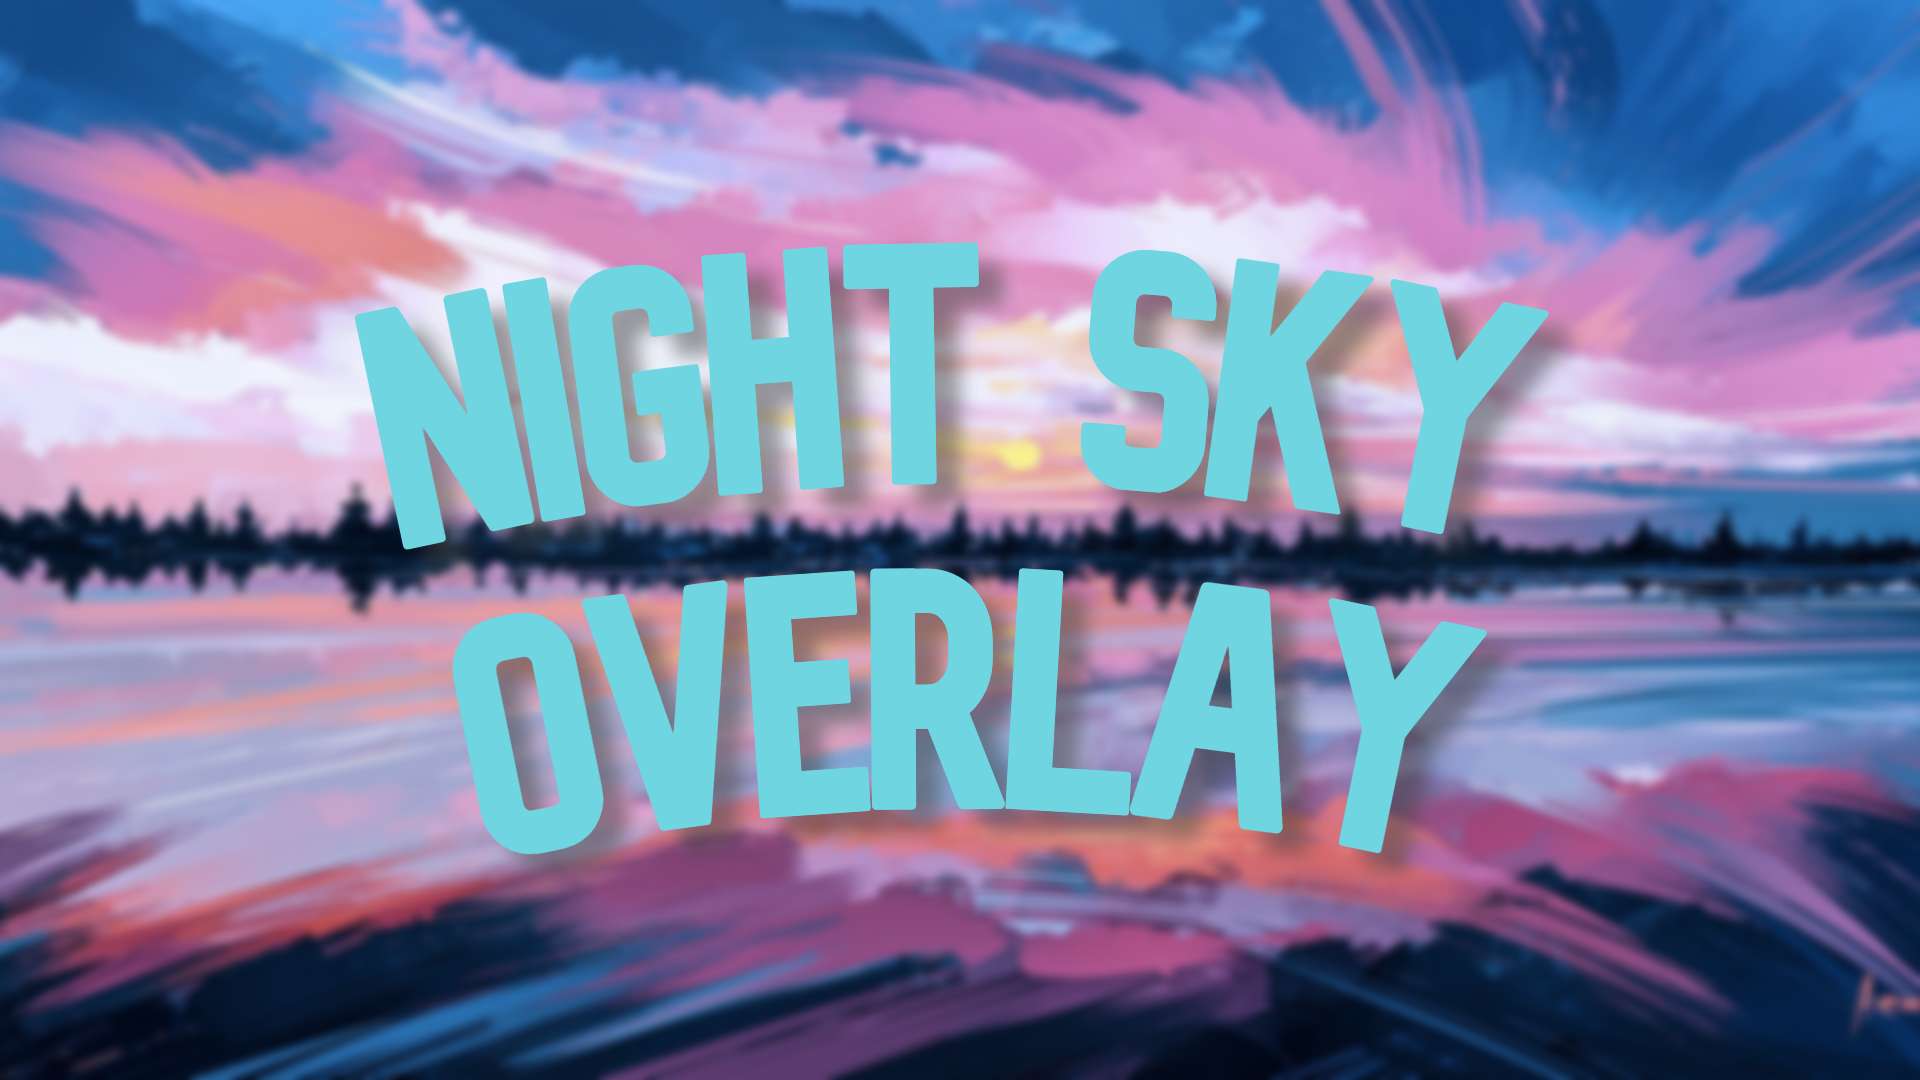 Night Sky Overlay #2 16x by rh56 on PvPRP